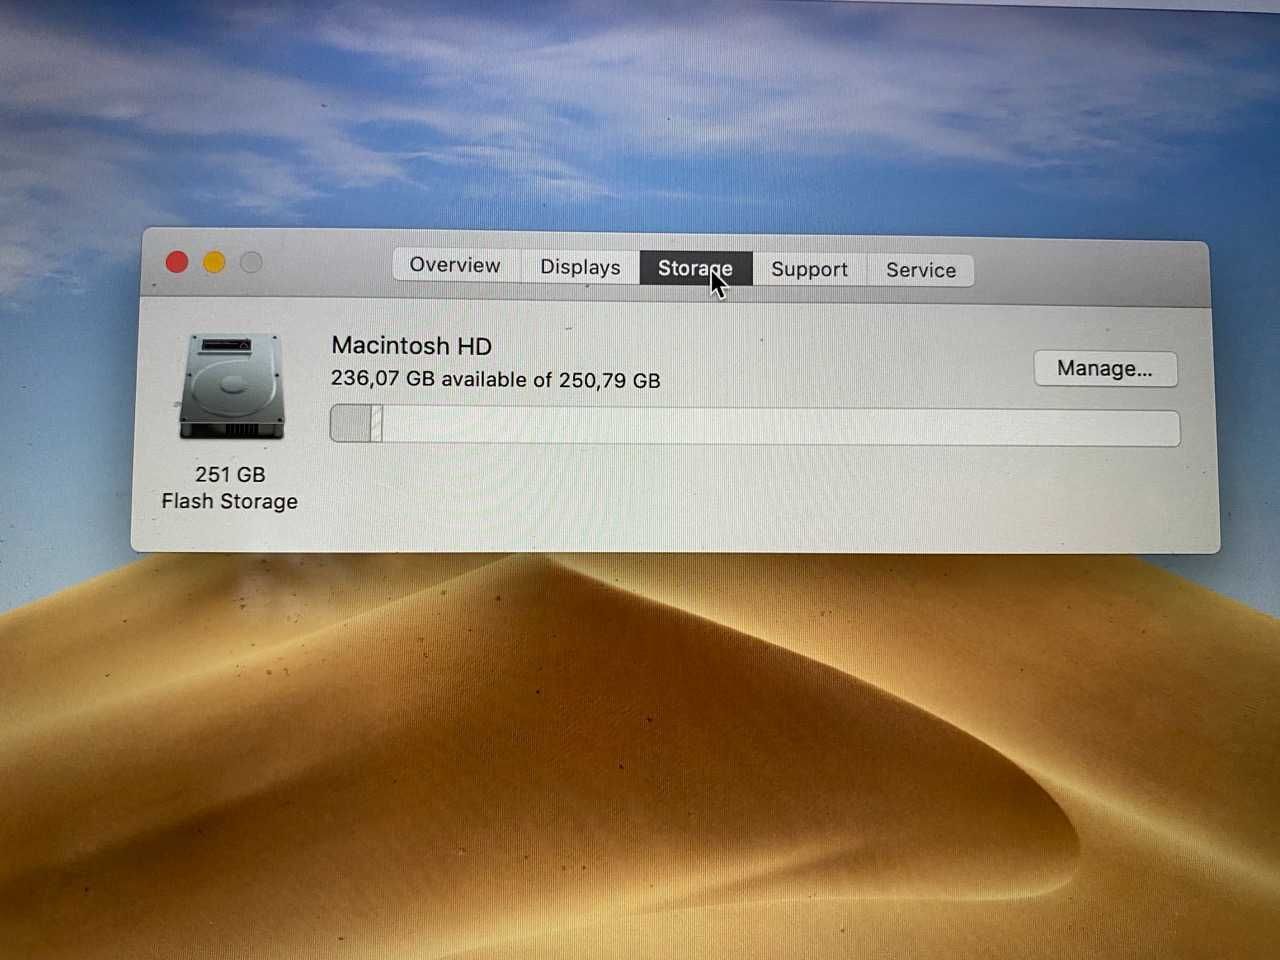 Mac Book Pro, 8GB, 2GHz, 15", 2017, used